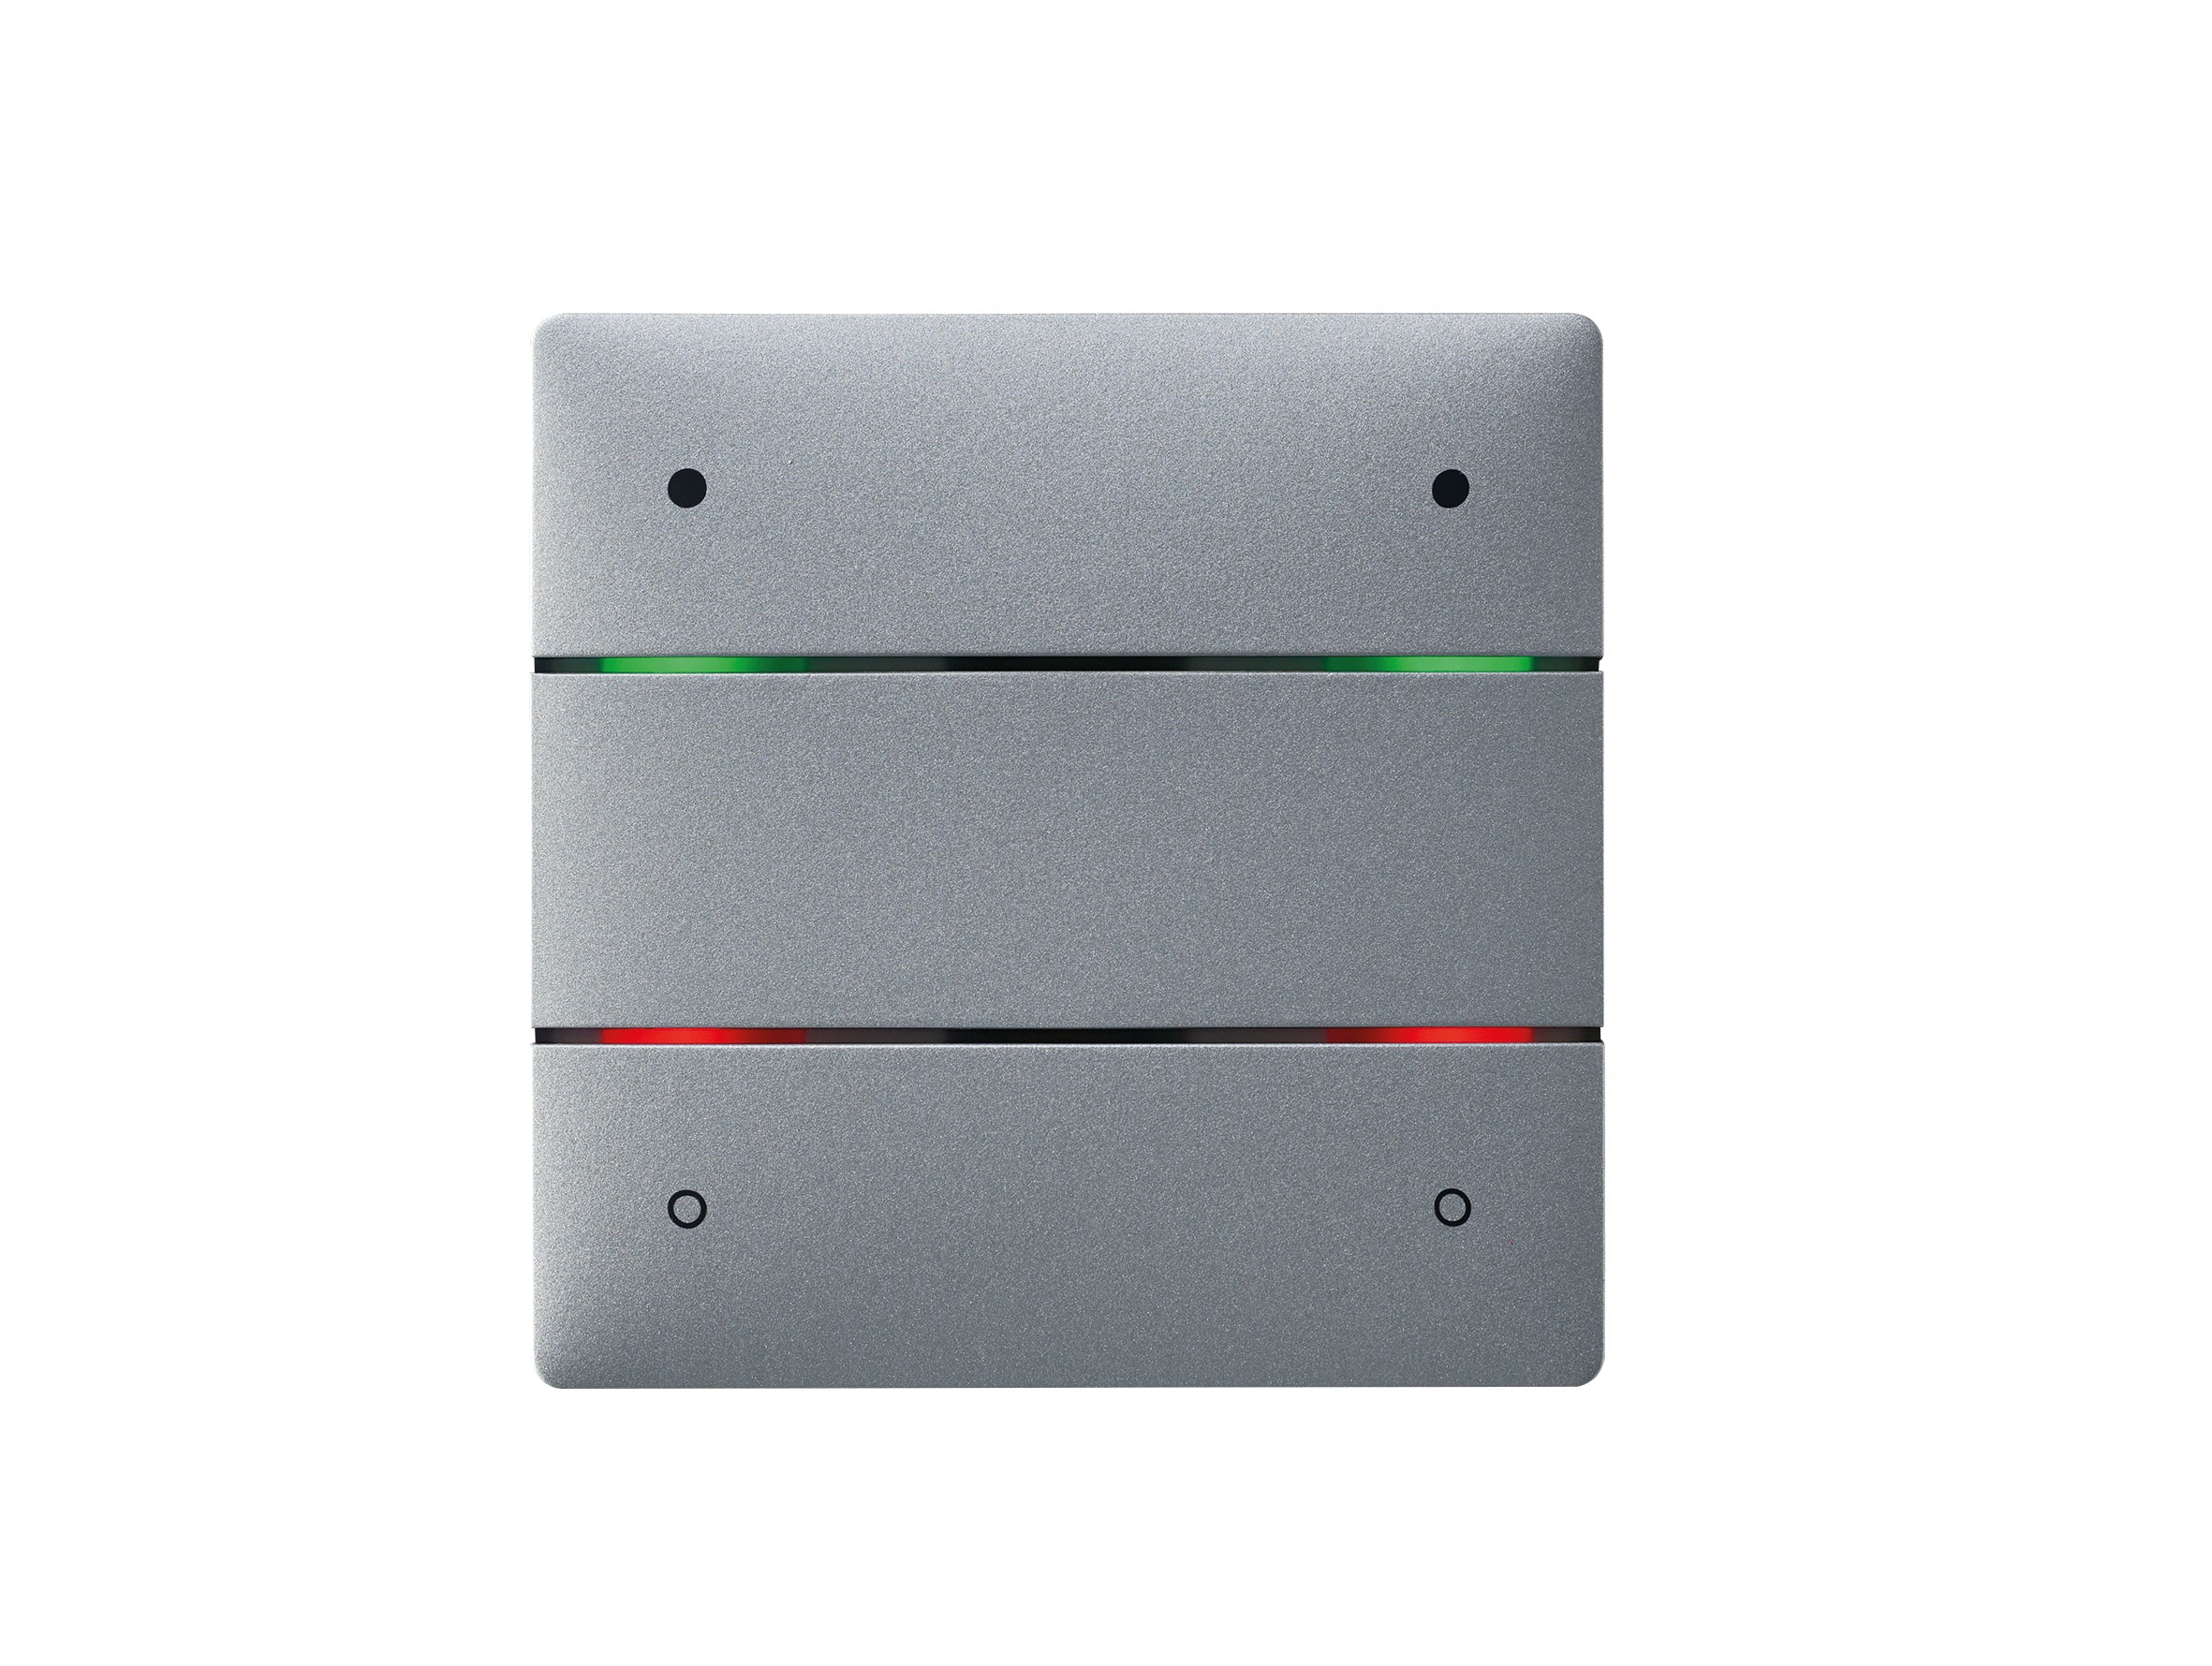 THEBEN LUXORliving-Tastsensor mit 4 Tasten und 4 Status-LEDs, integrierter Temperatursensor, Farbe silber